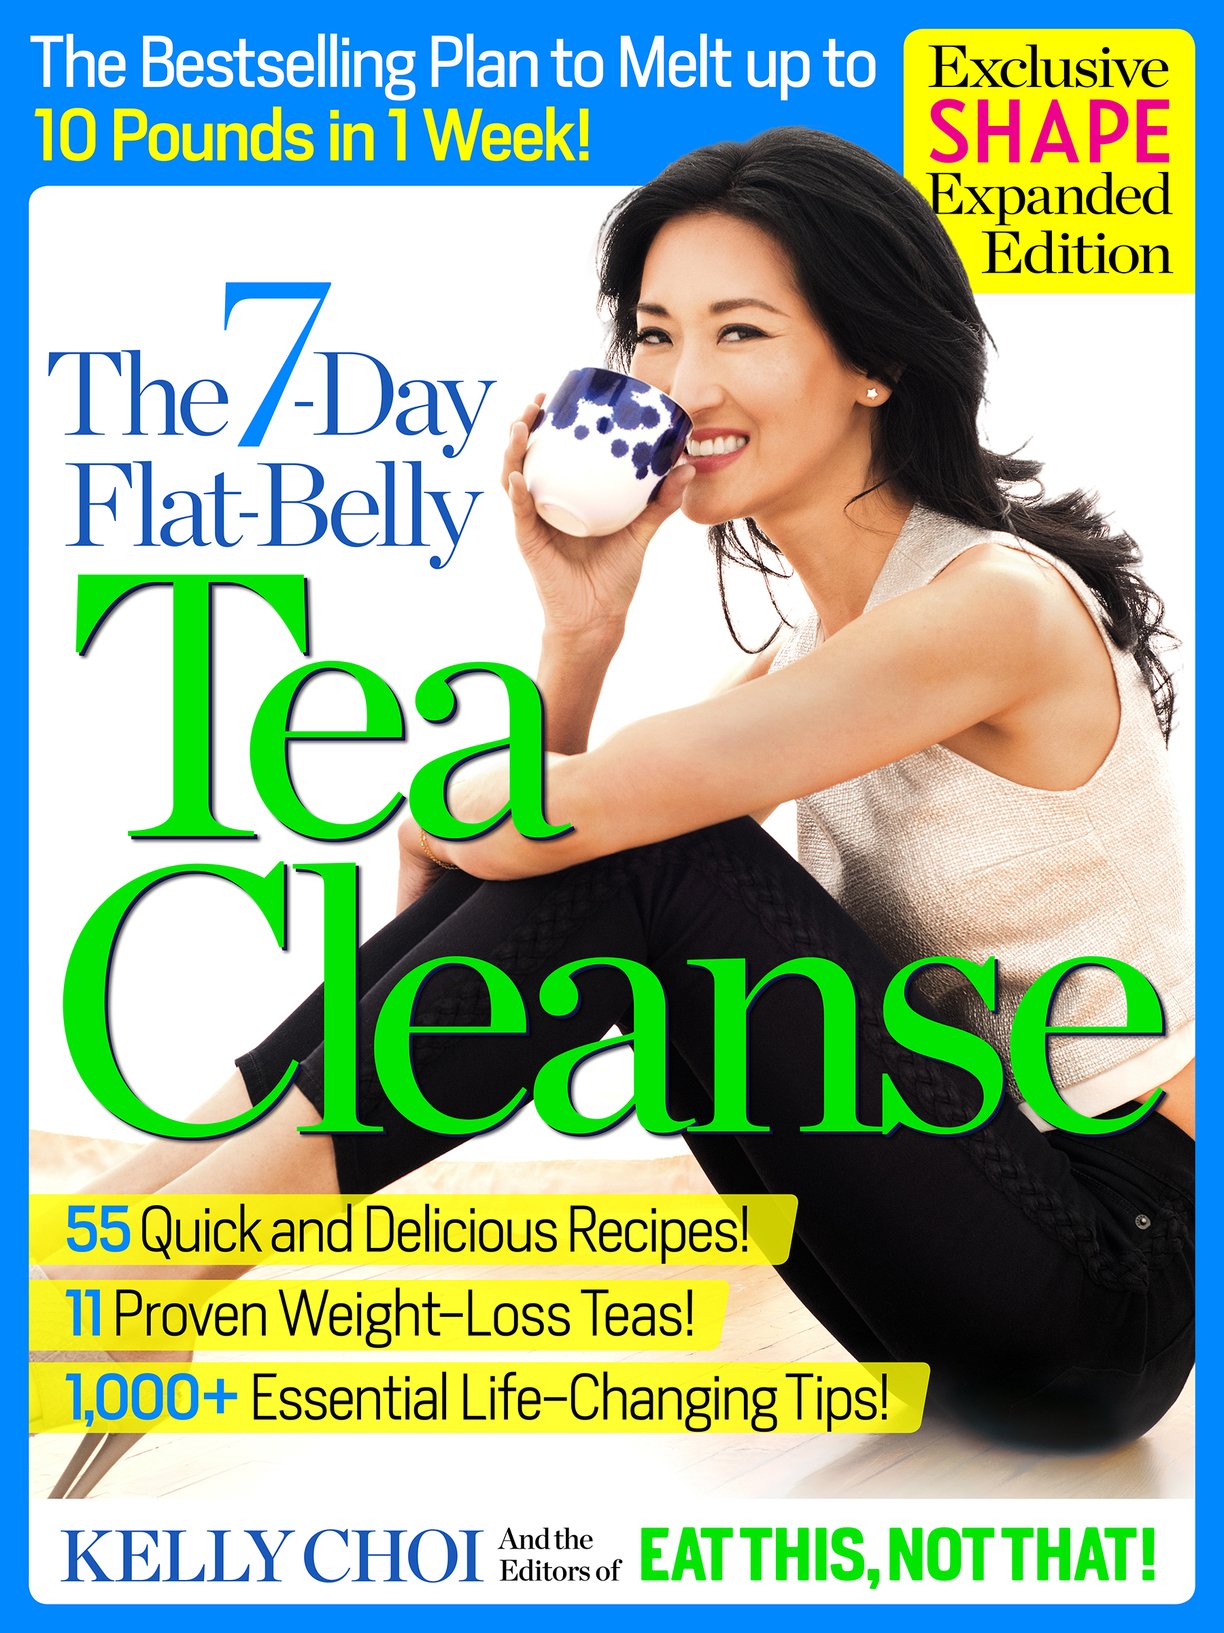 21 day flat belly fix tea